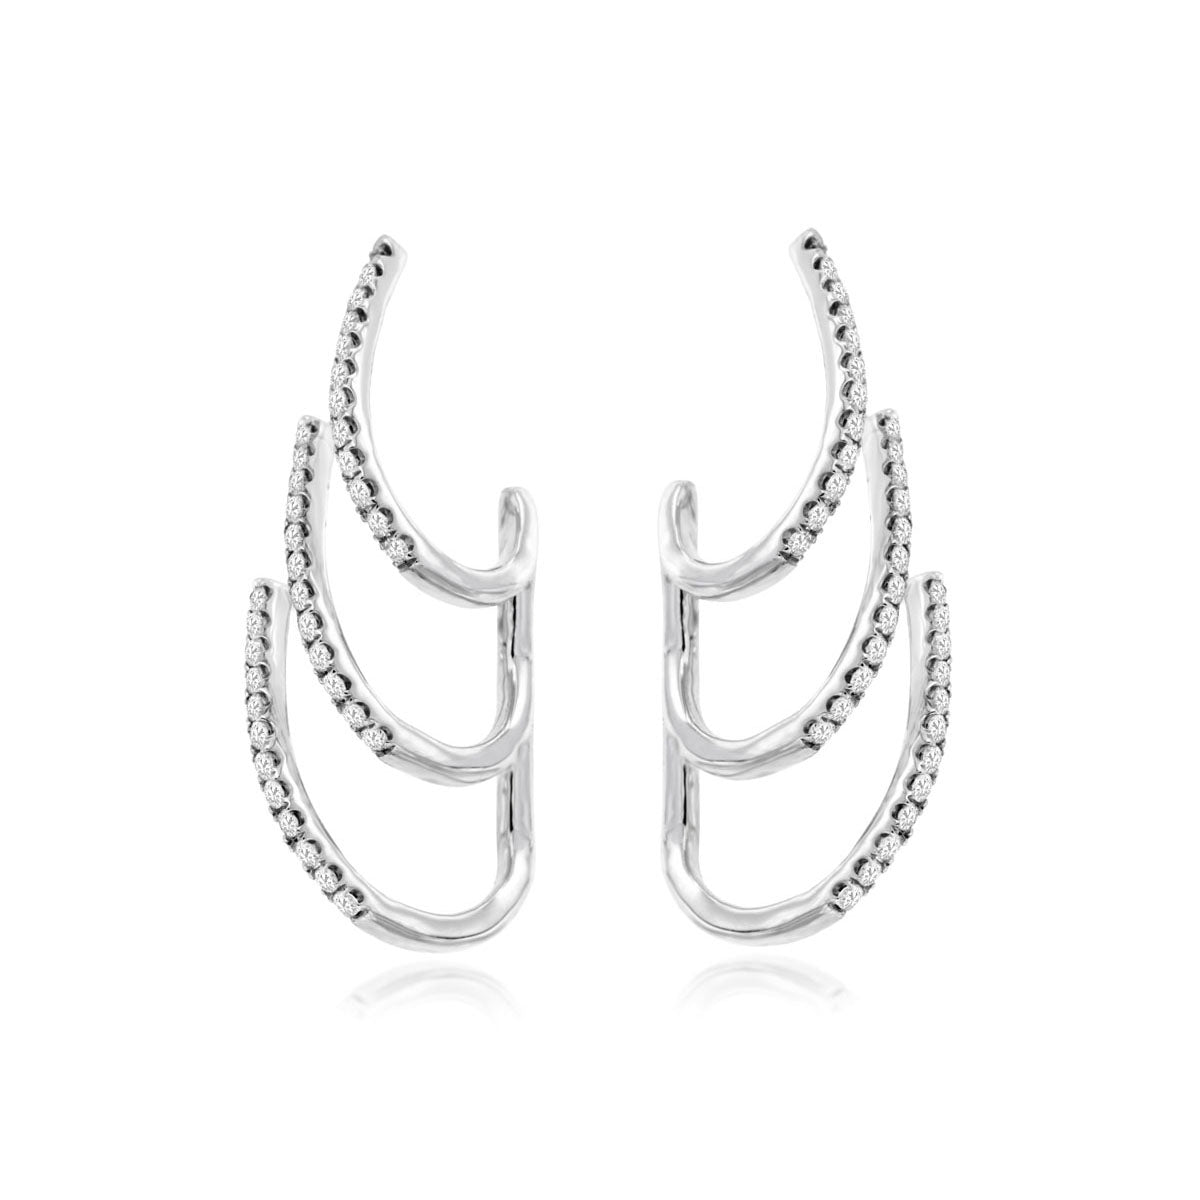 14kw diamond wrap earrings - eklektic jewelry studio